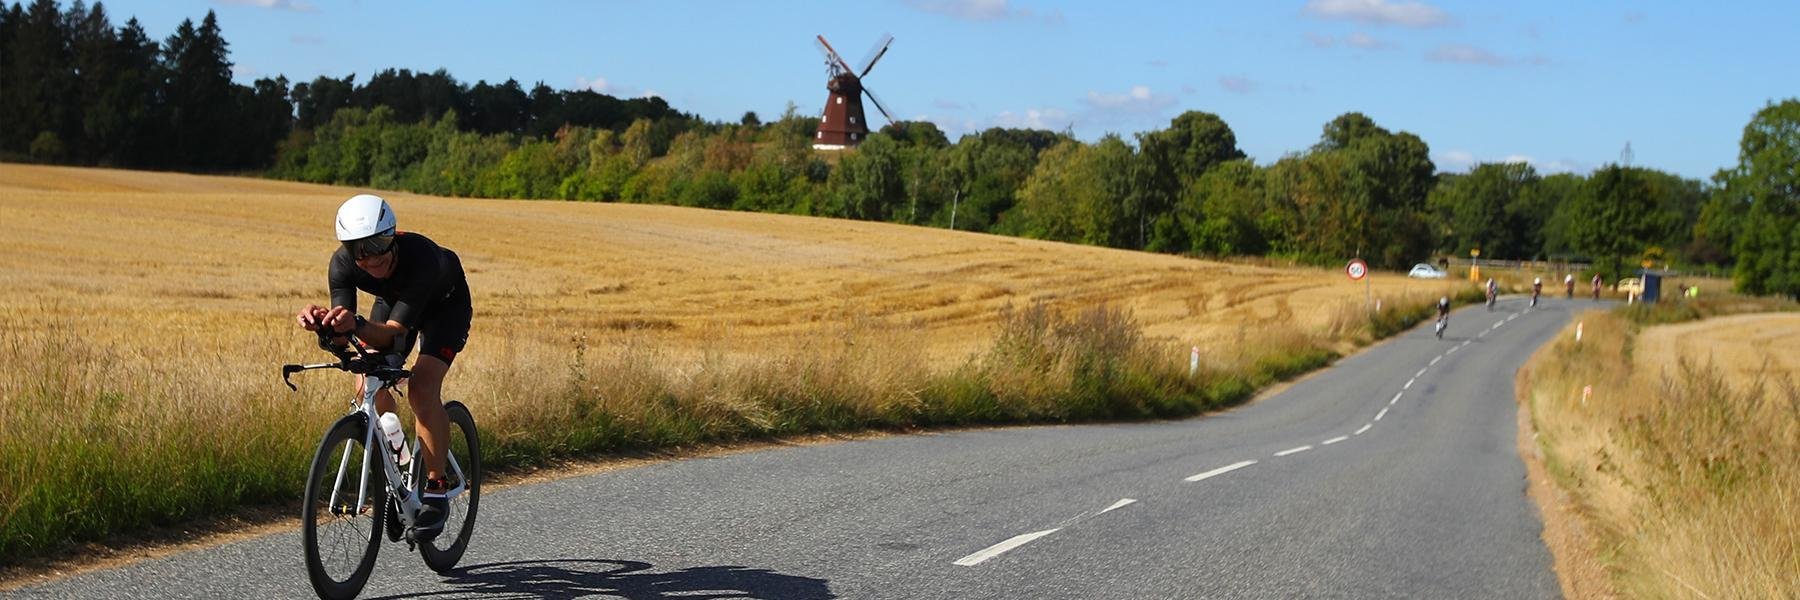 IRONMAN Copenhagen athlete biking through the green countryside in Denmark